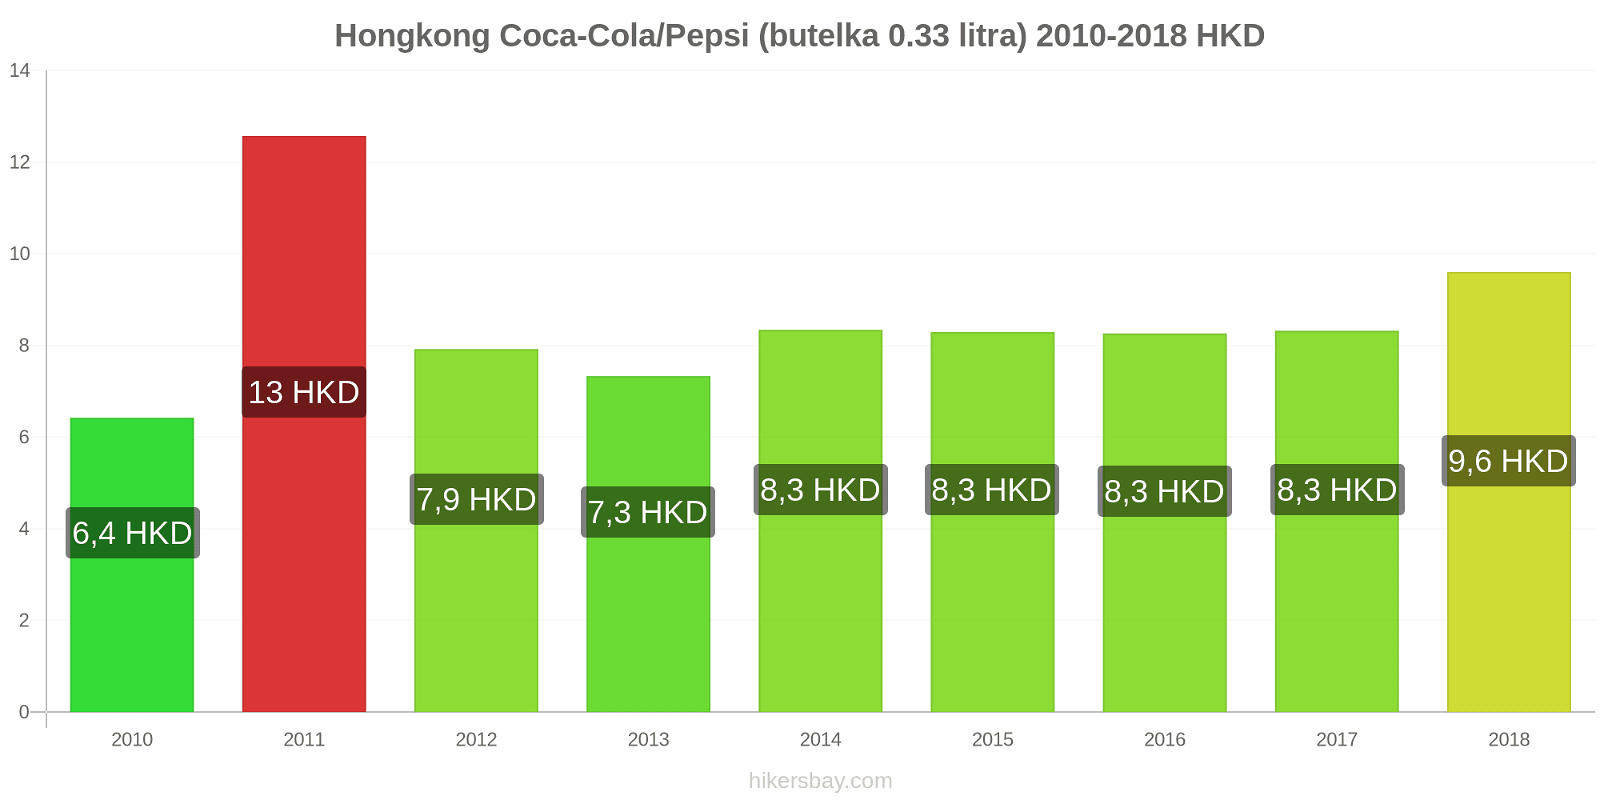 Hongkong zmiany cen Coca-Cola/Pepsi (butelka 0.33 litra) hikersbay.com